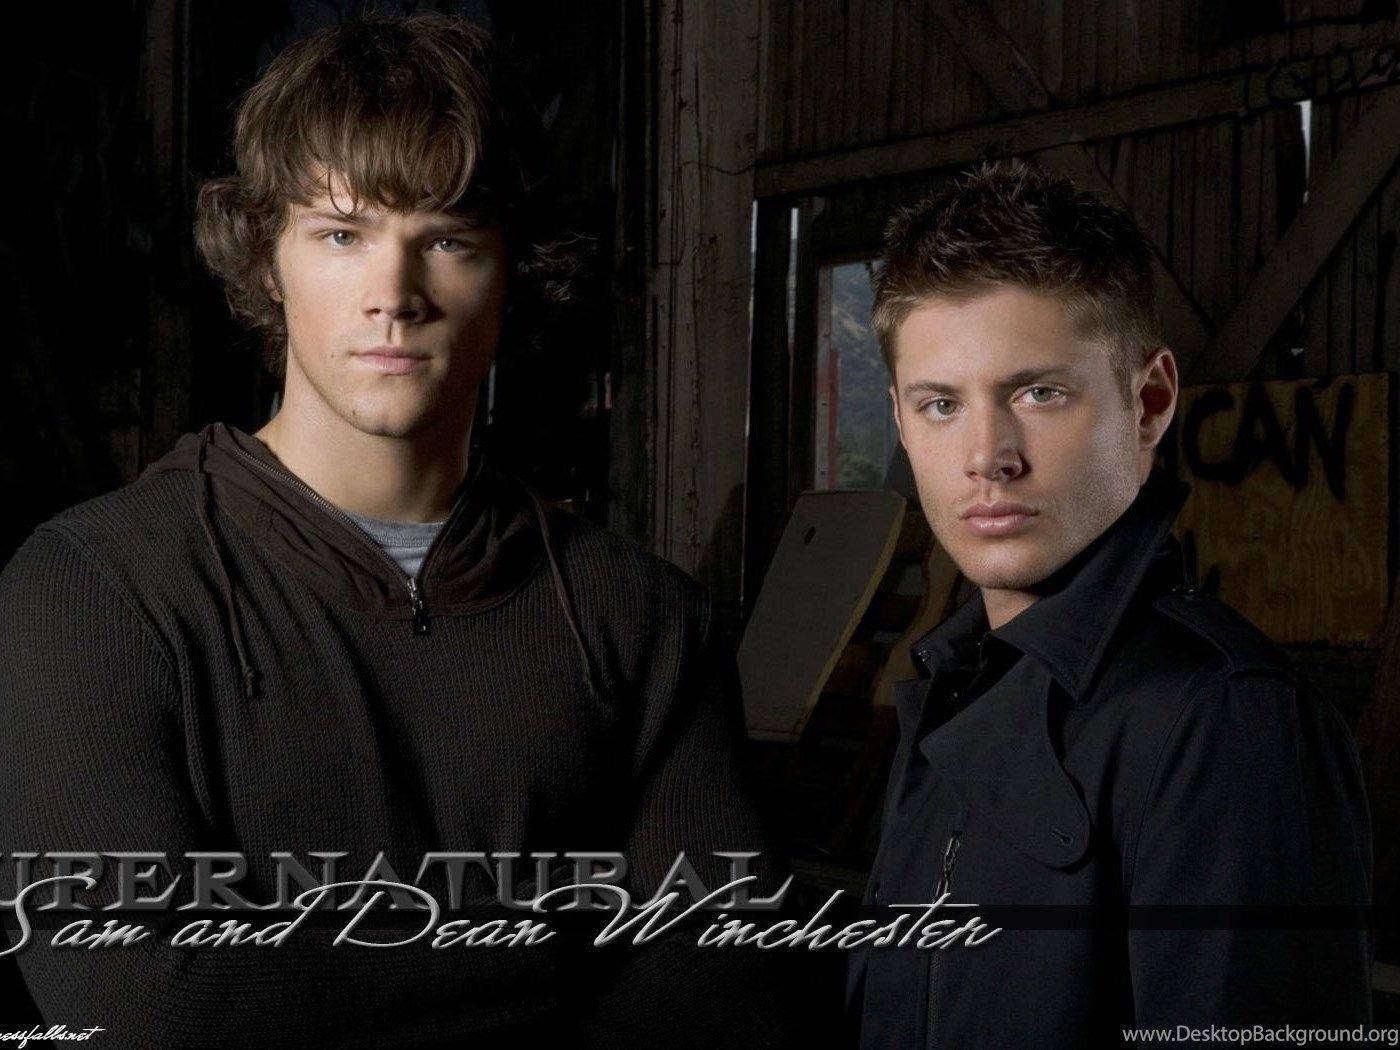 Brothers Dean and Sam Winchester, stars of the long-running supernatural drama Supernatural. Wallpaper